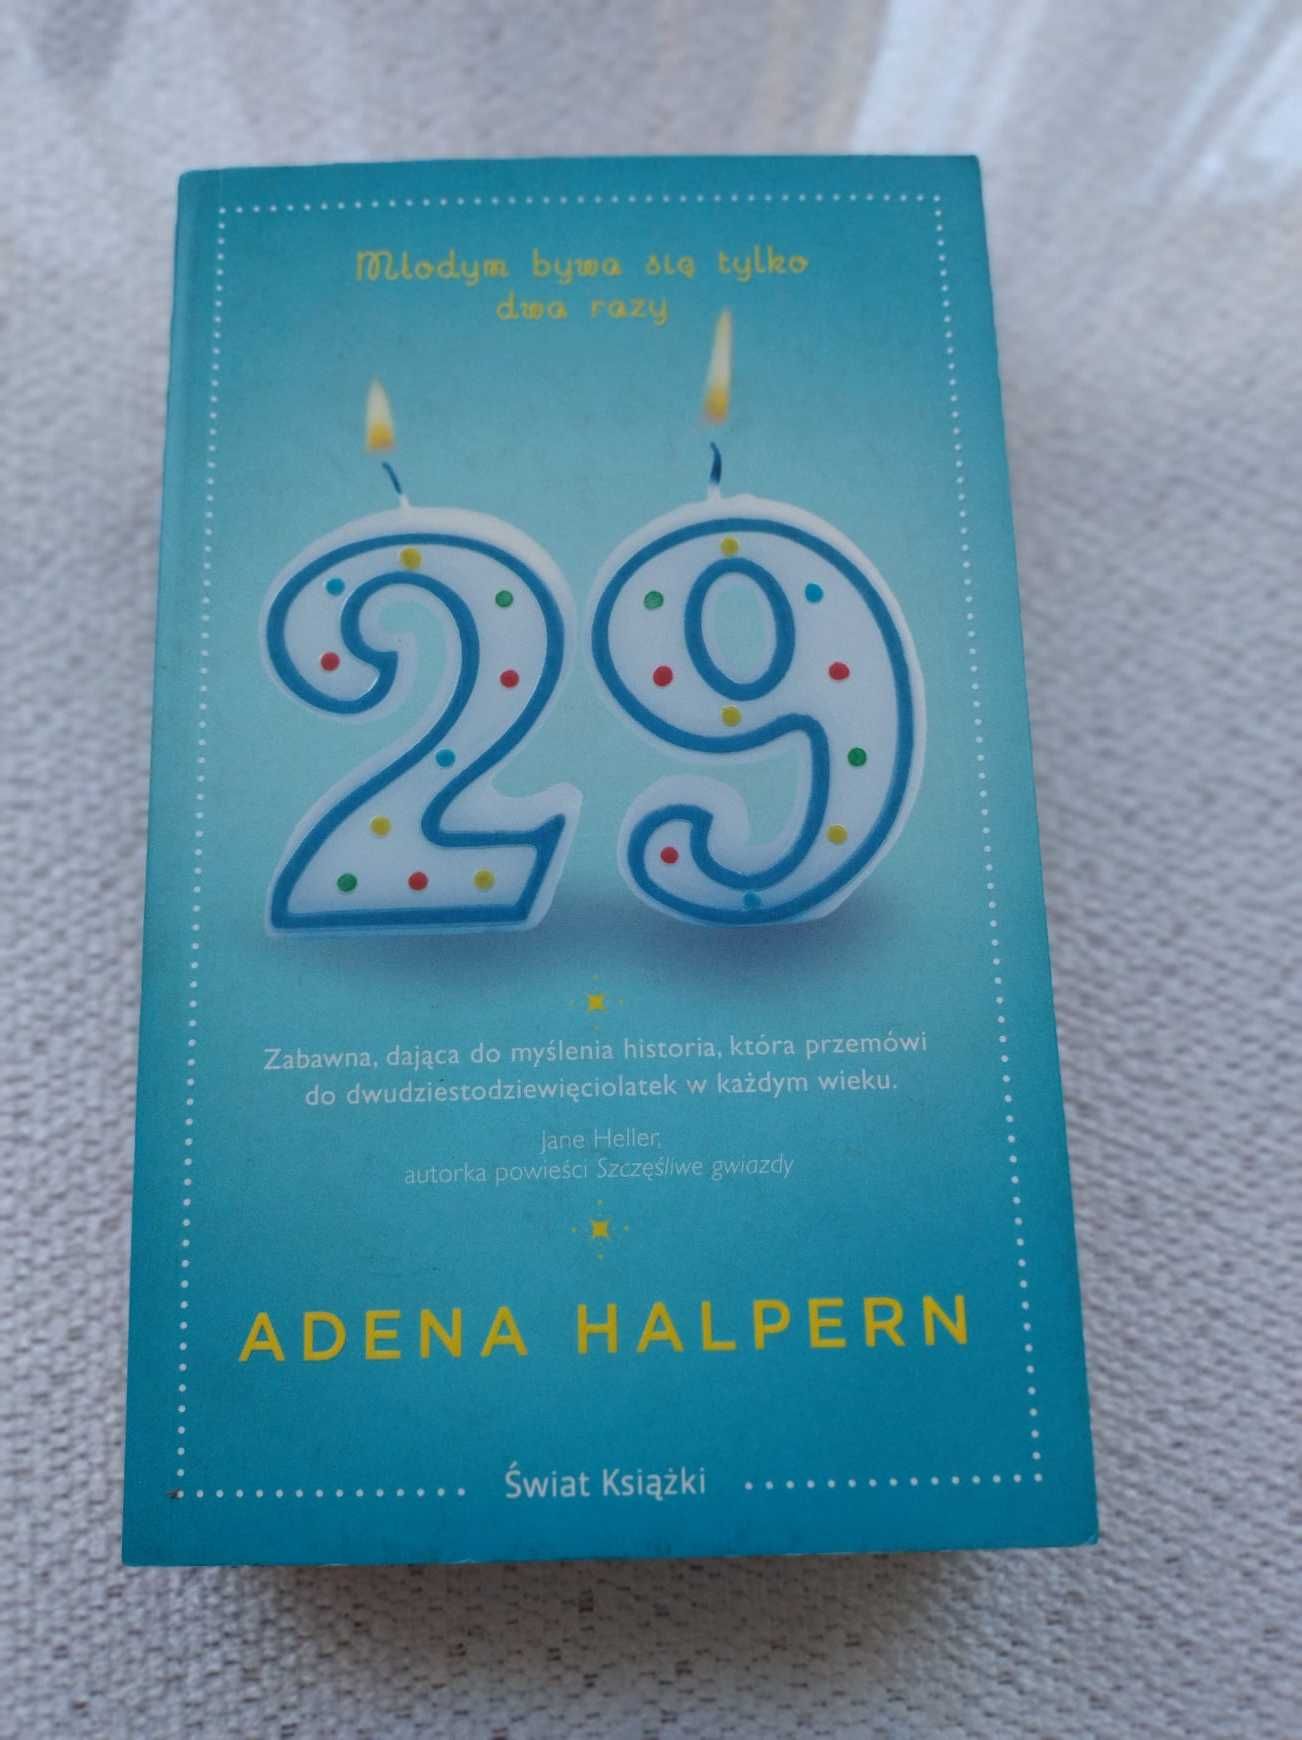 Halpern Adena "29"